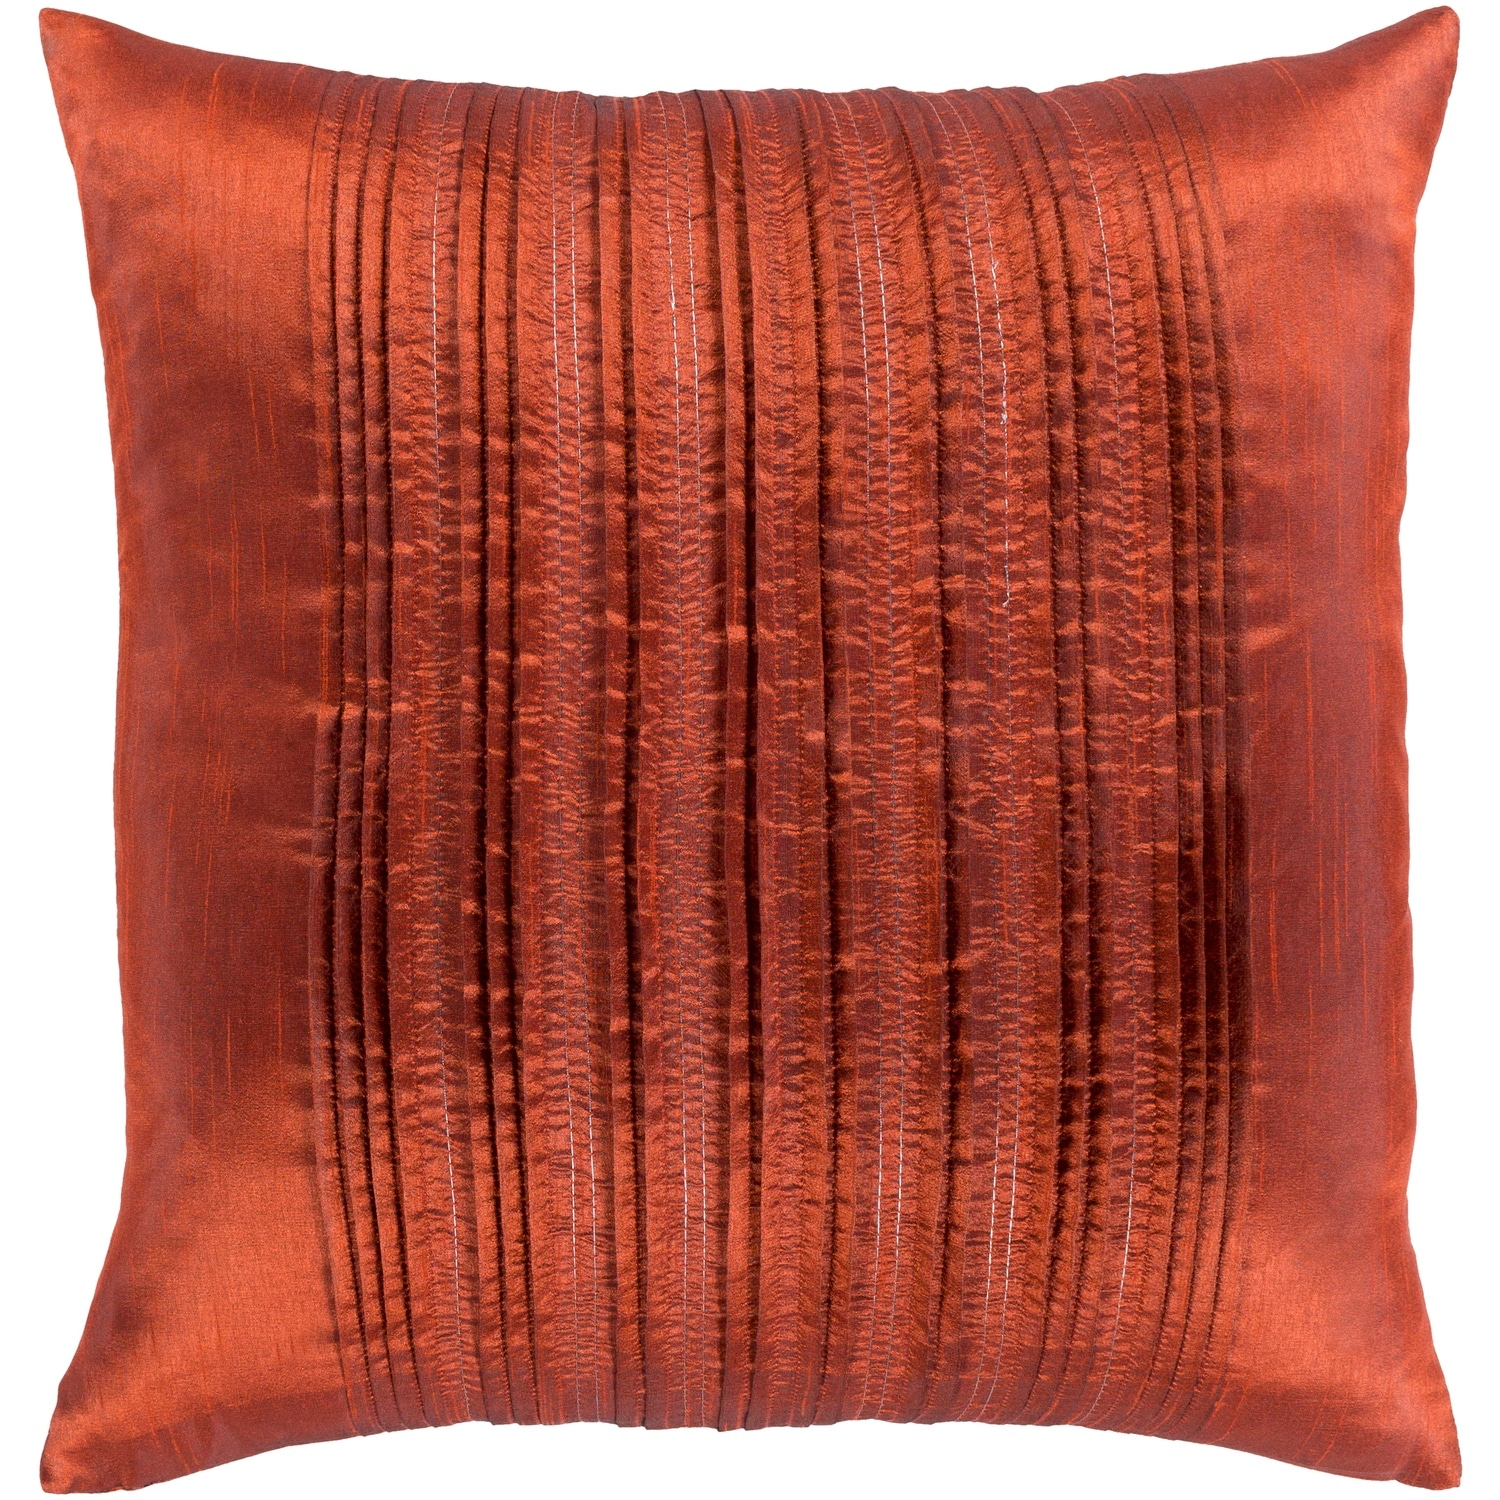 Artistic Weavers Josune Metallic Burnt Orange Feather Down or Poly Filled Throw Pillow 18-inch